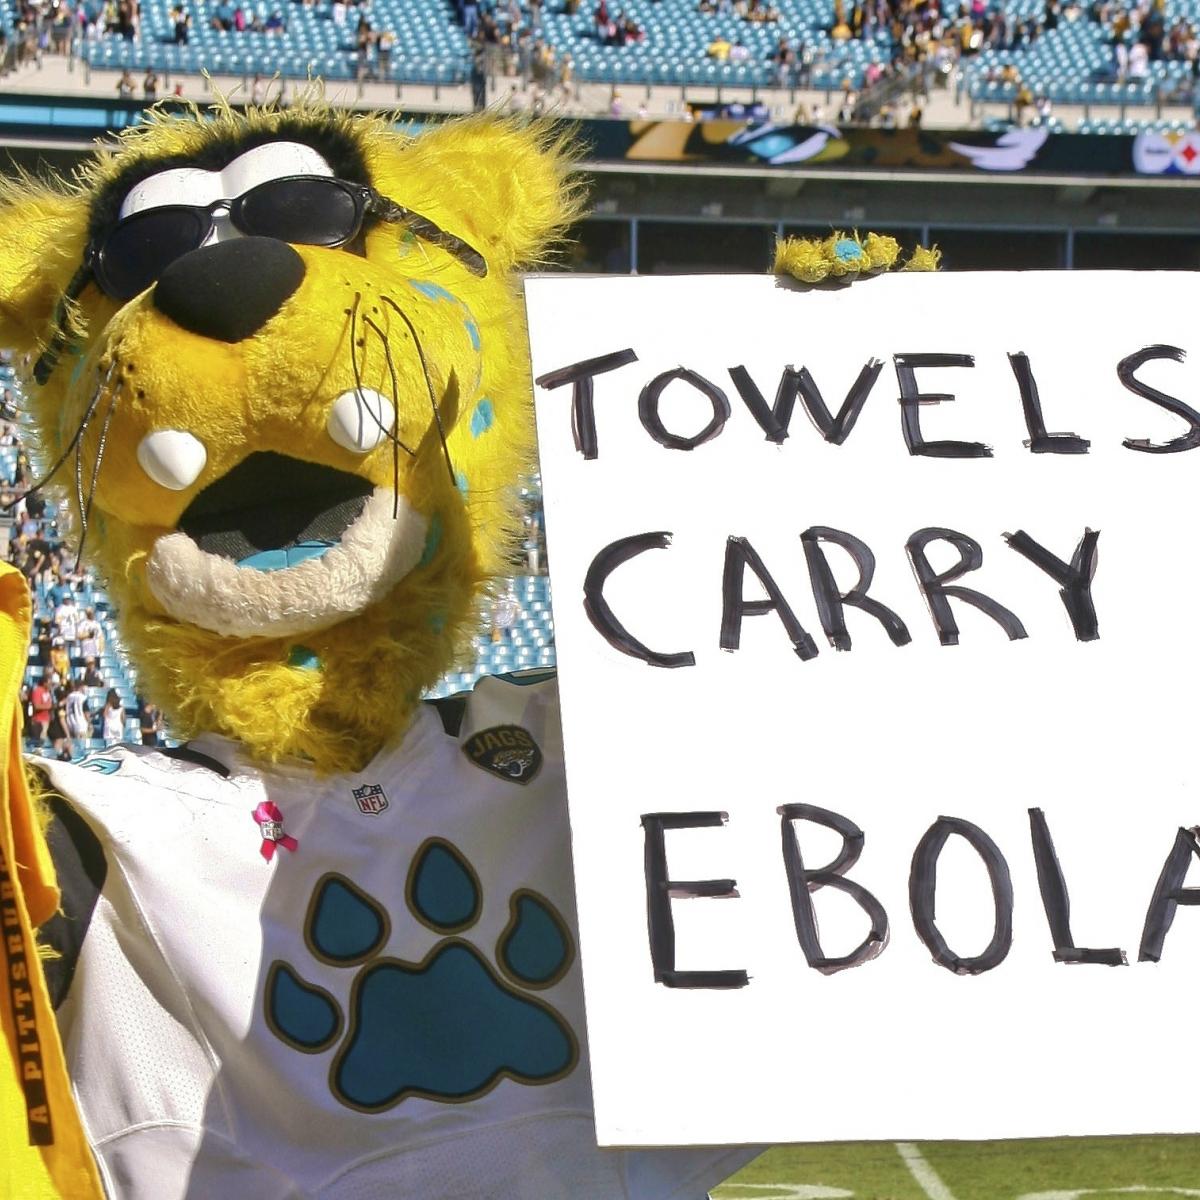 Jacksonville Jaguars Mascot Jokes 'Terrible Towels' Carry 